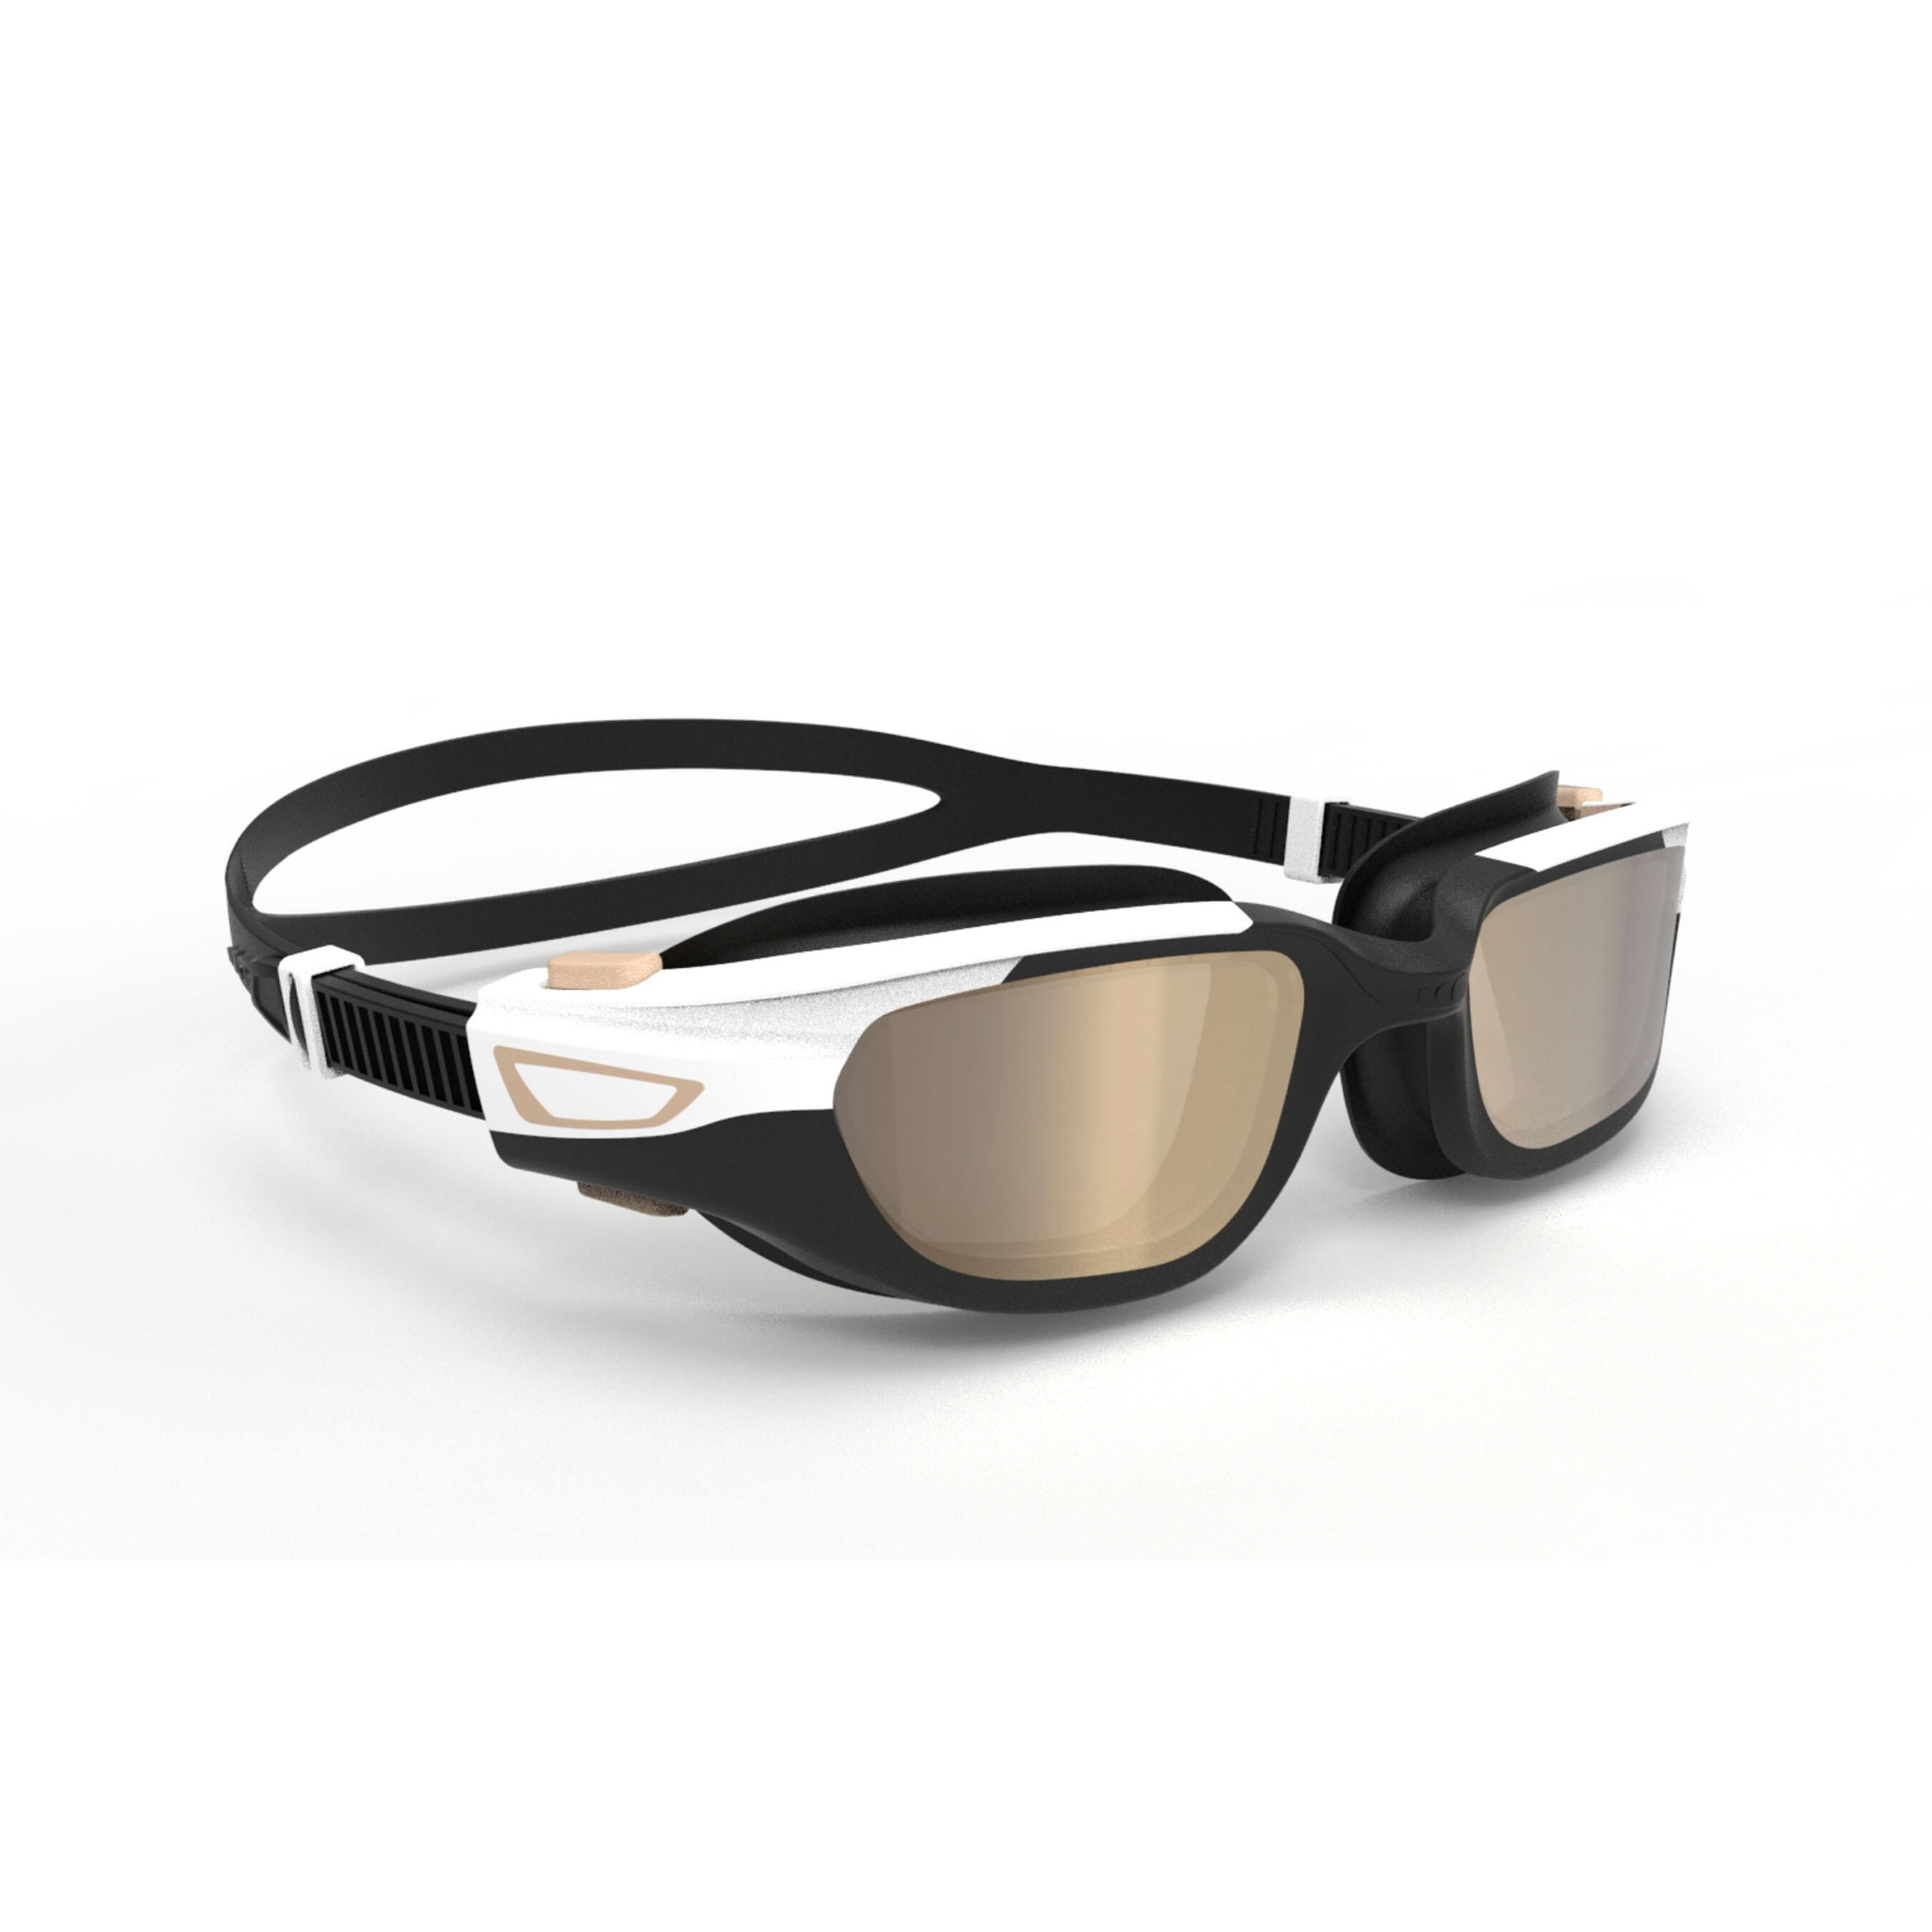 NABAIJI Swimming SPIRIT goggles - Mirror lenses - Large - Black beige white